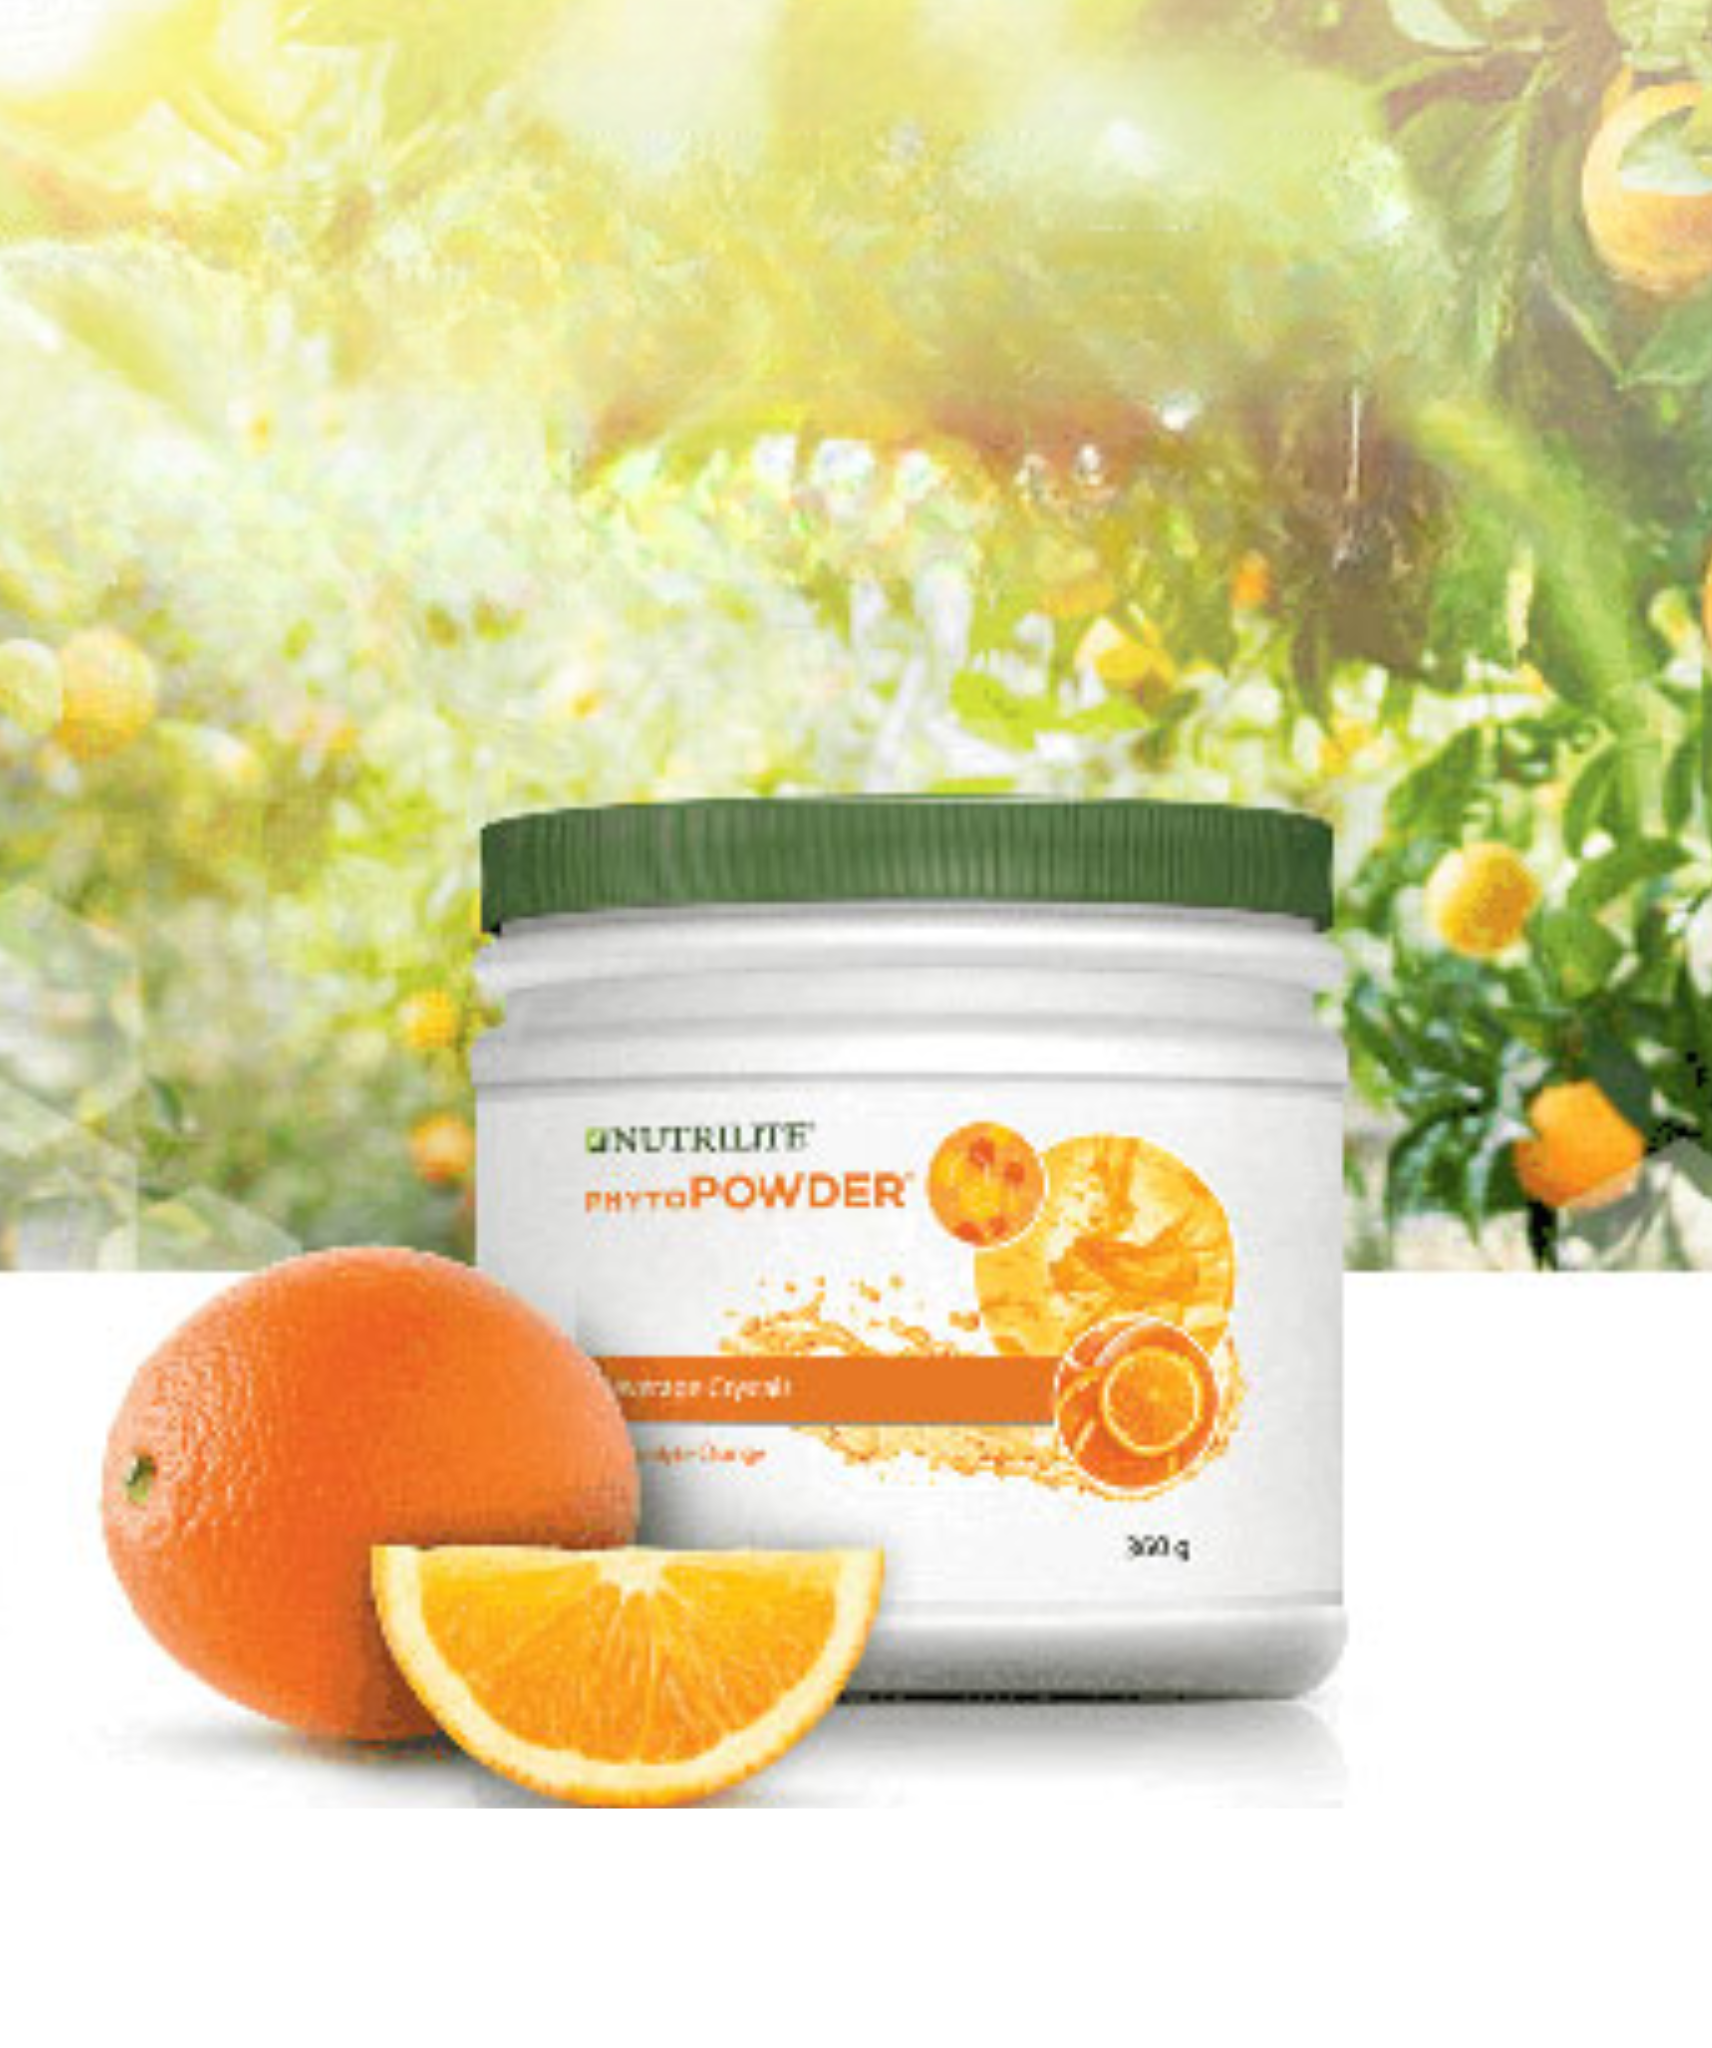 Nutrilite Phytopowder có vị cam dễ uống